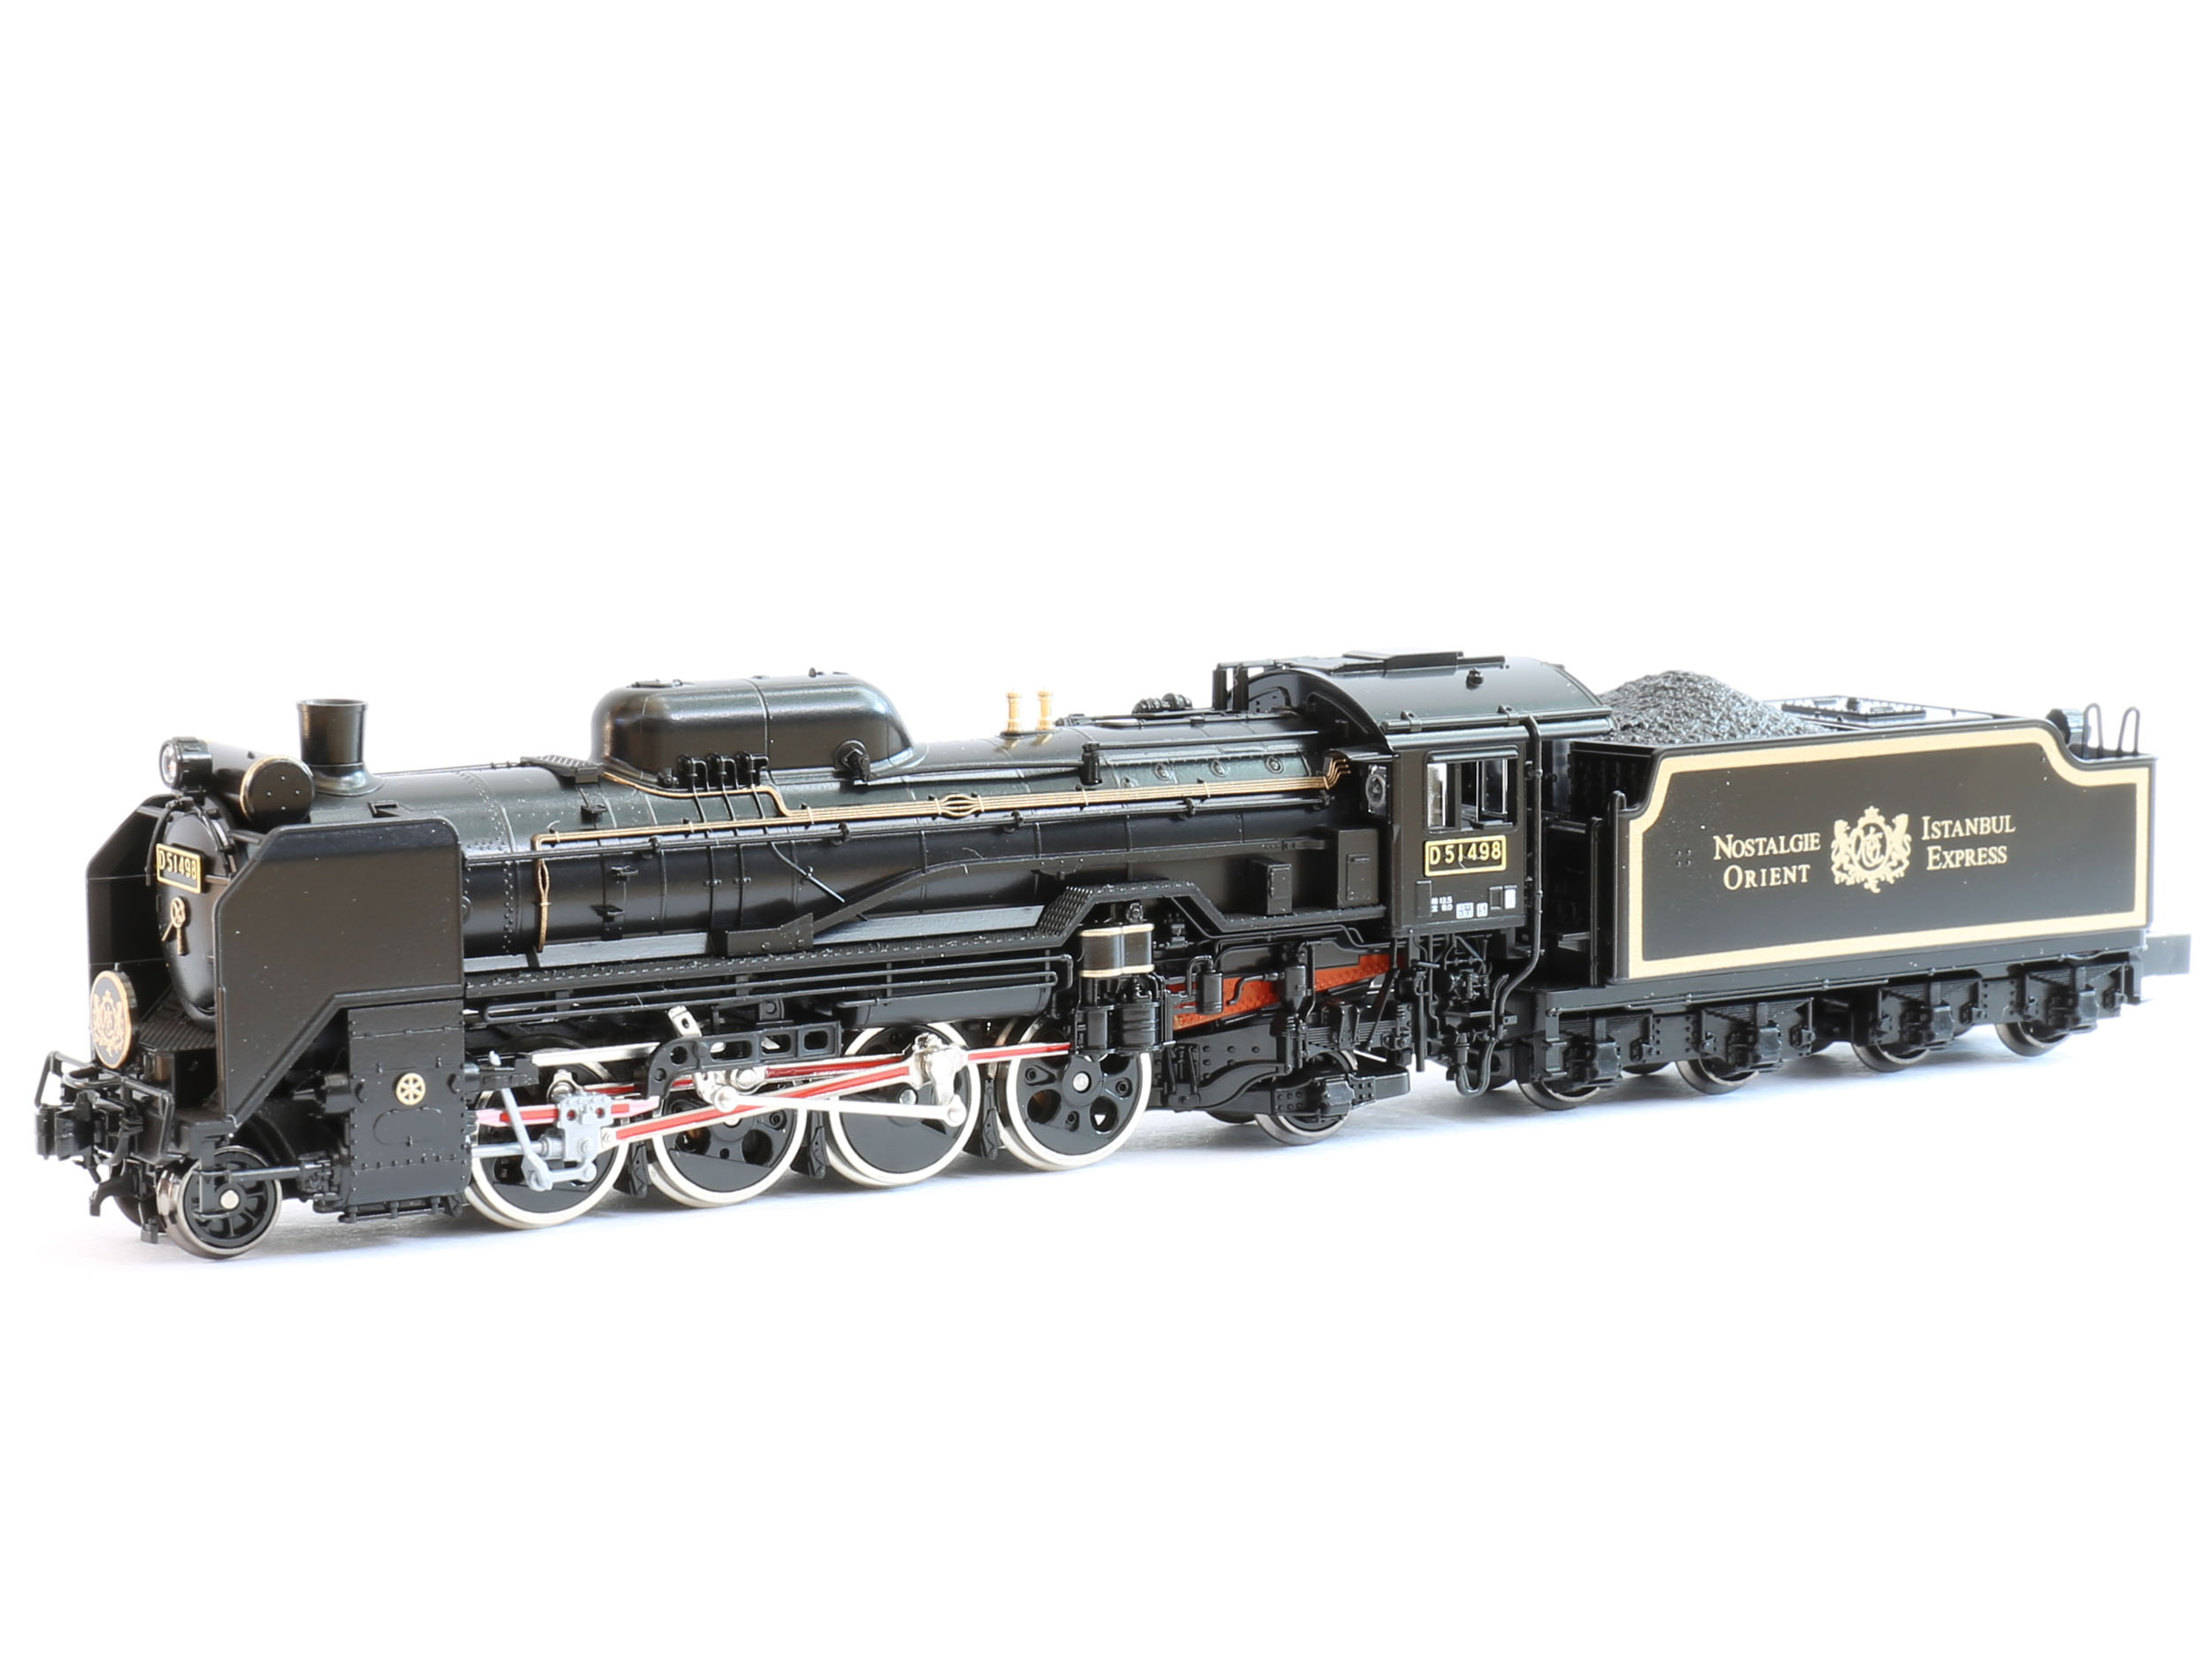 Kato 16 2 Steam Locomotive D51 498 Ciwl And Jnr Orient Express 19 1 150 Dm Toys